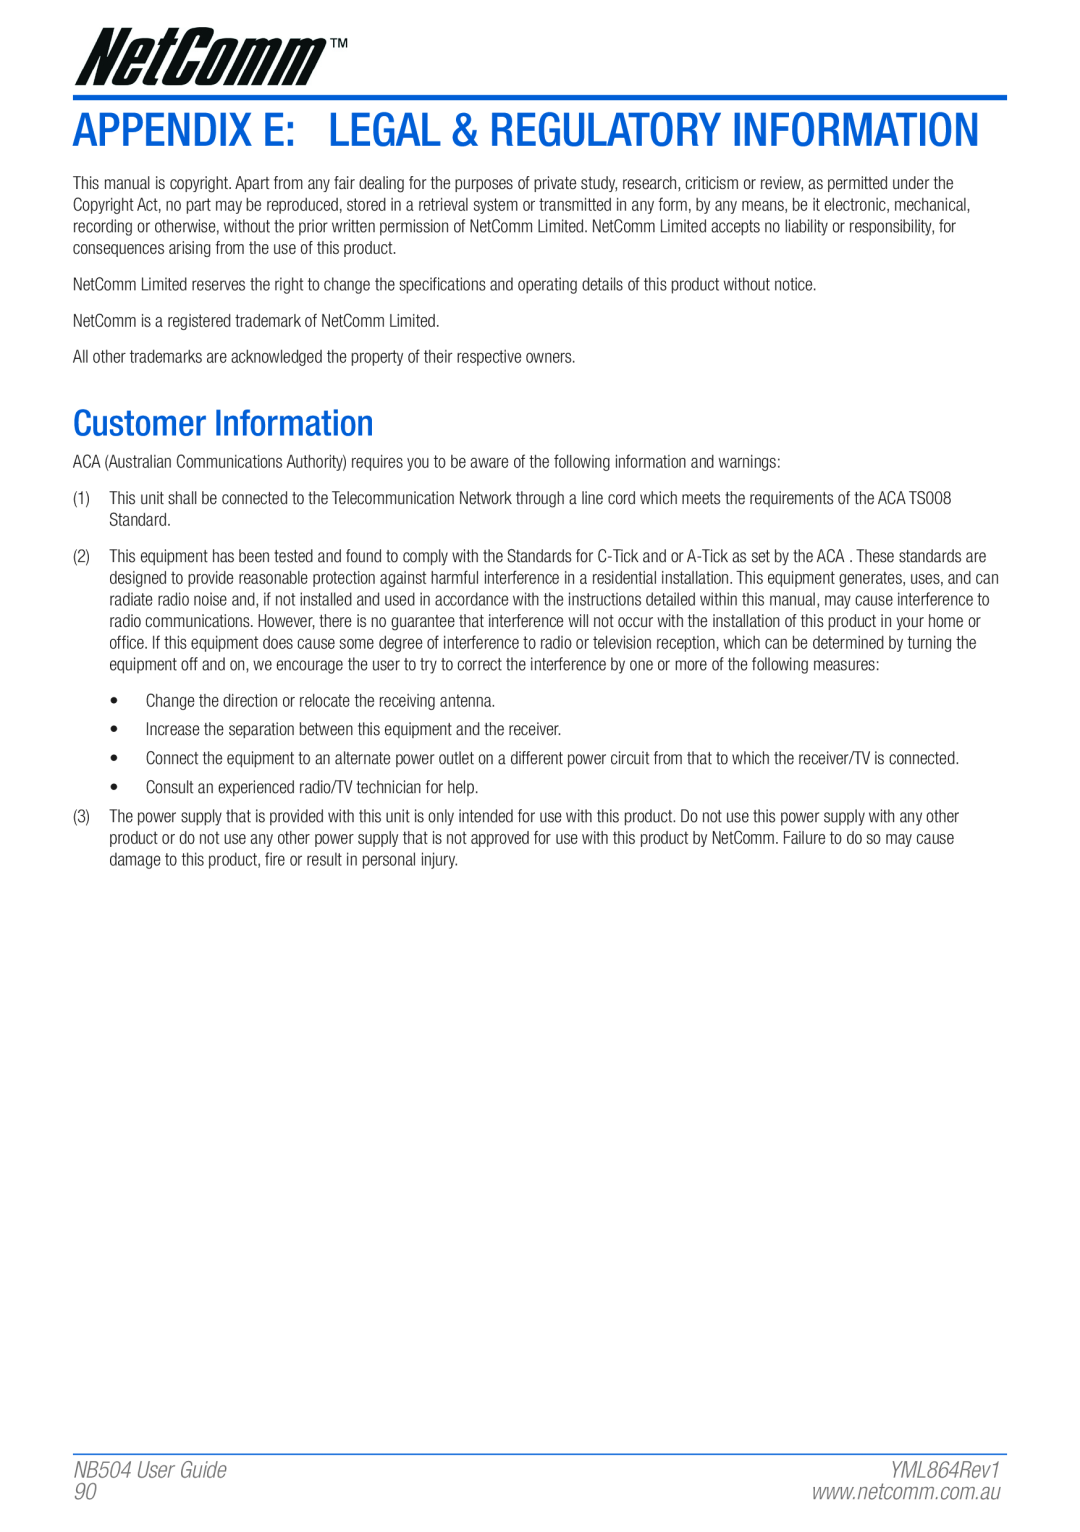 NetComm manual Appendix E Legal & Regulatory Information, Customer Information, NB504 User Guide, YML864Rev1 